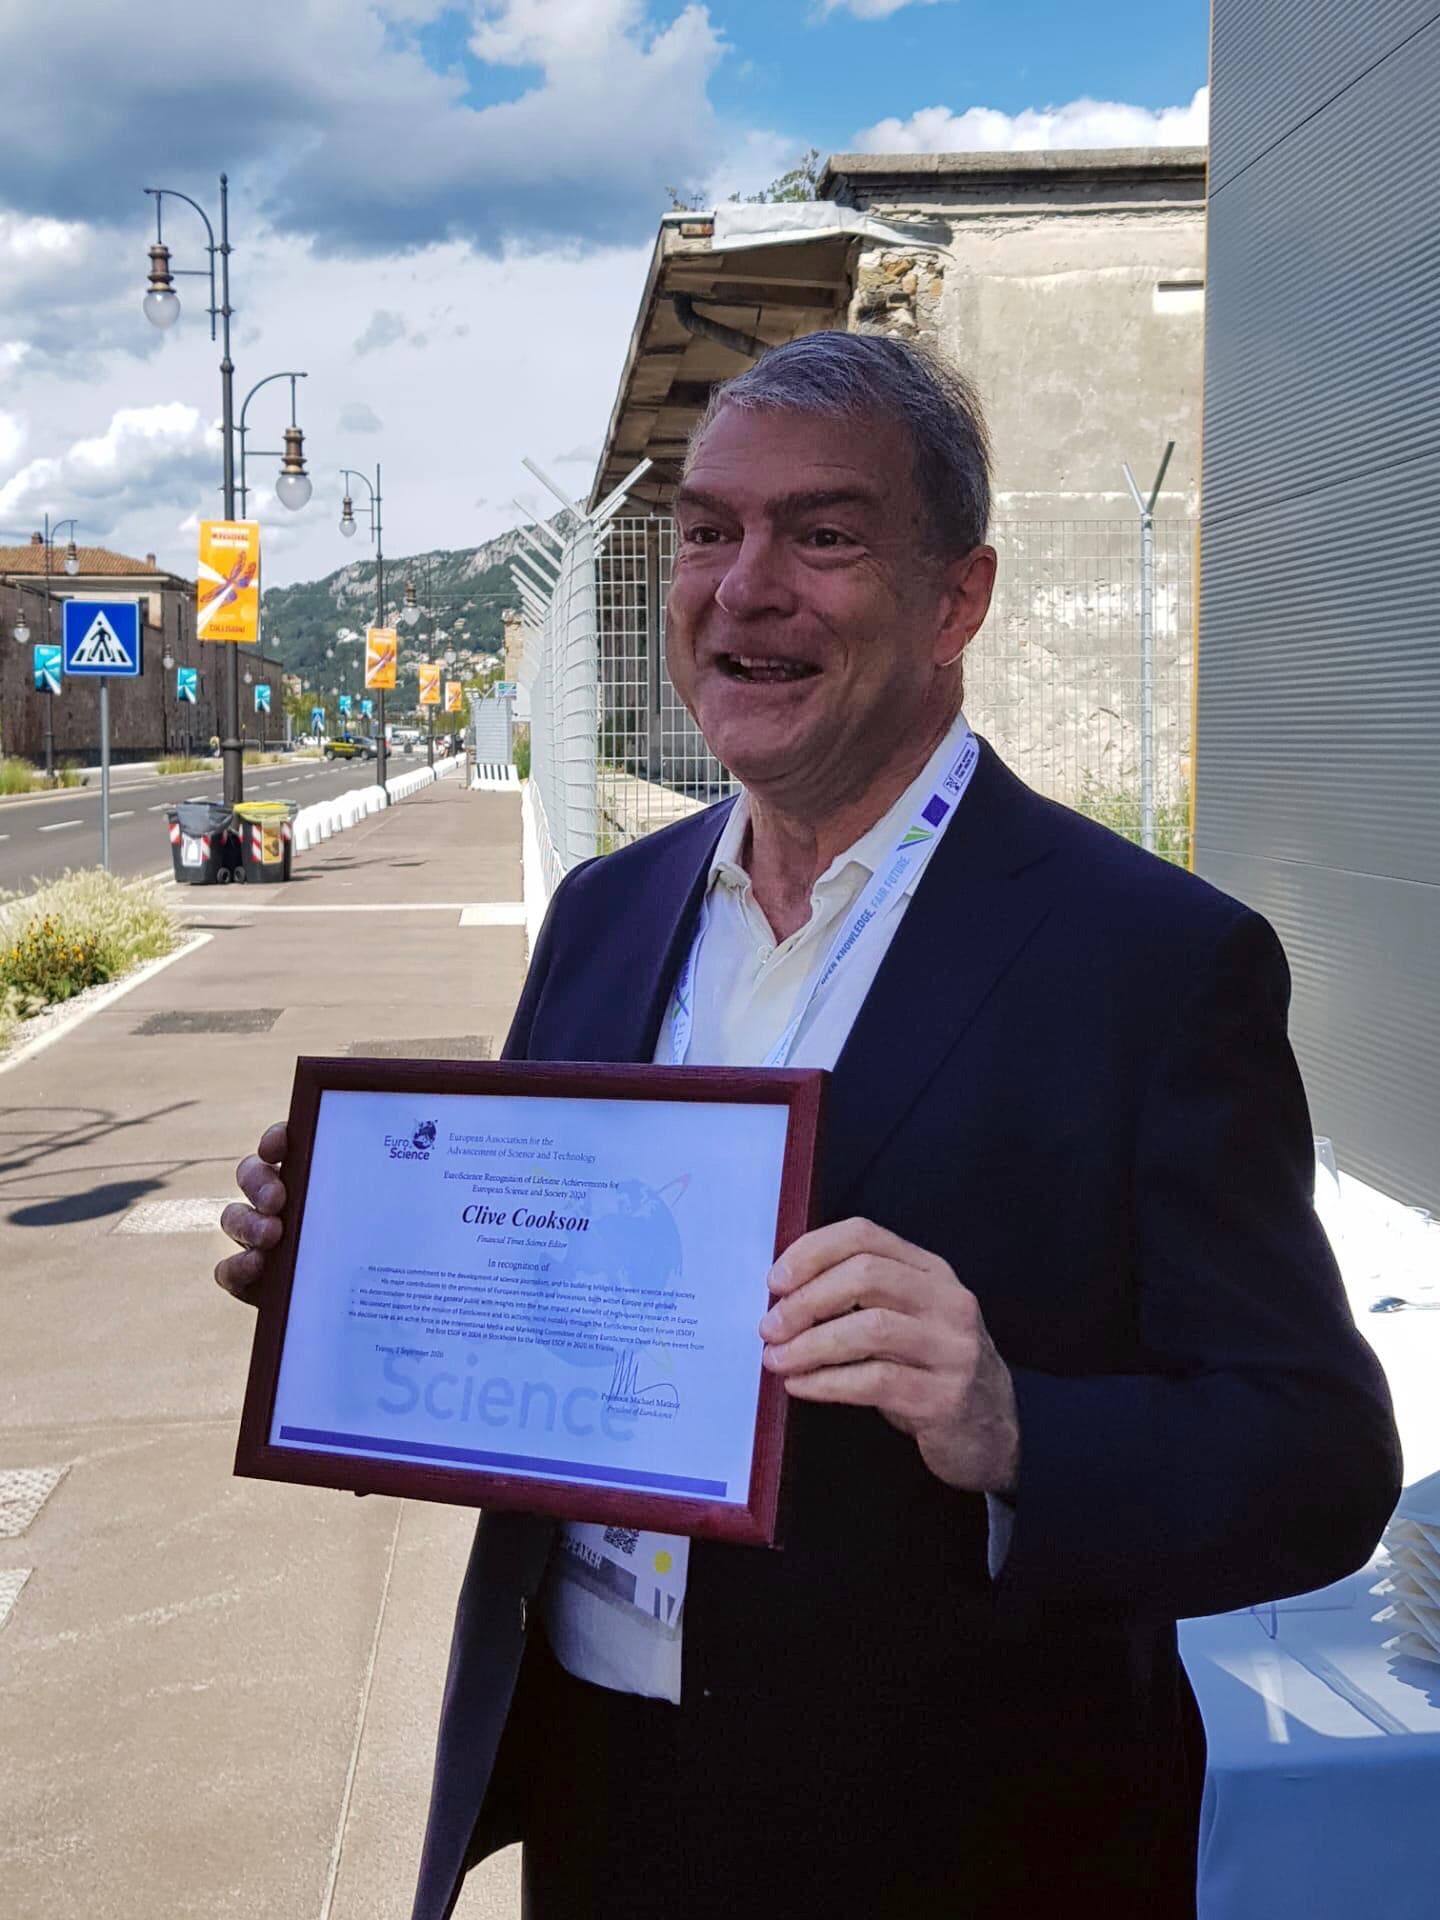 Clive Cooksen proudly shows off his Euroscience's Lifetime Achievement Award